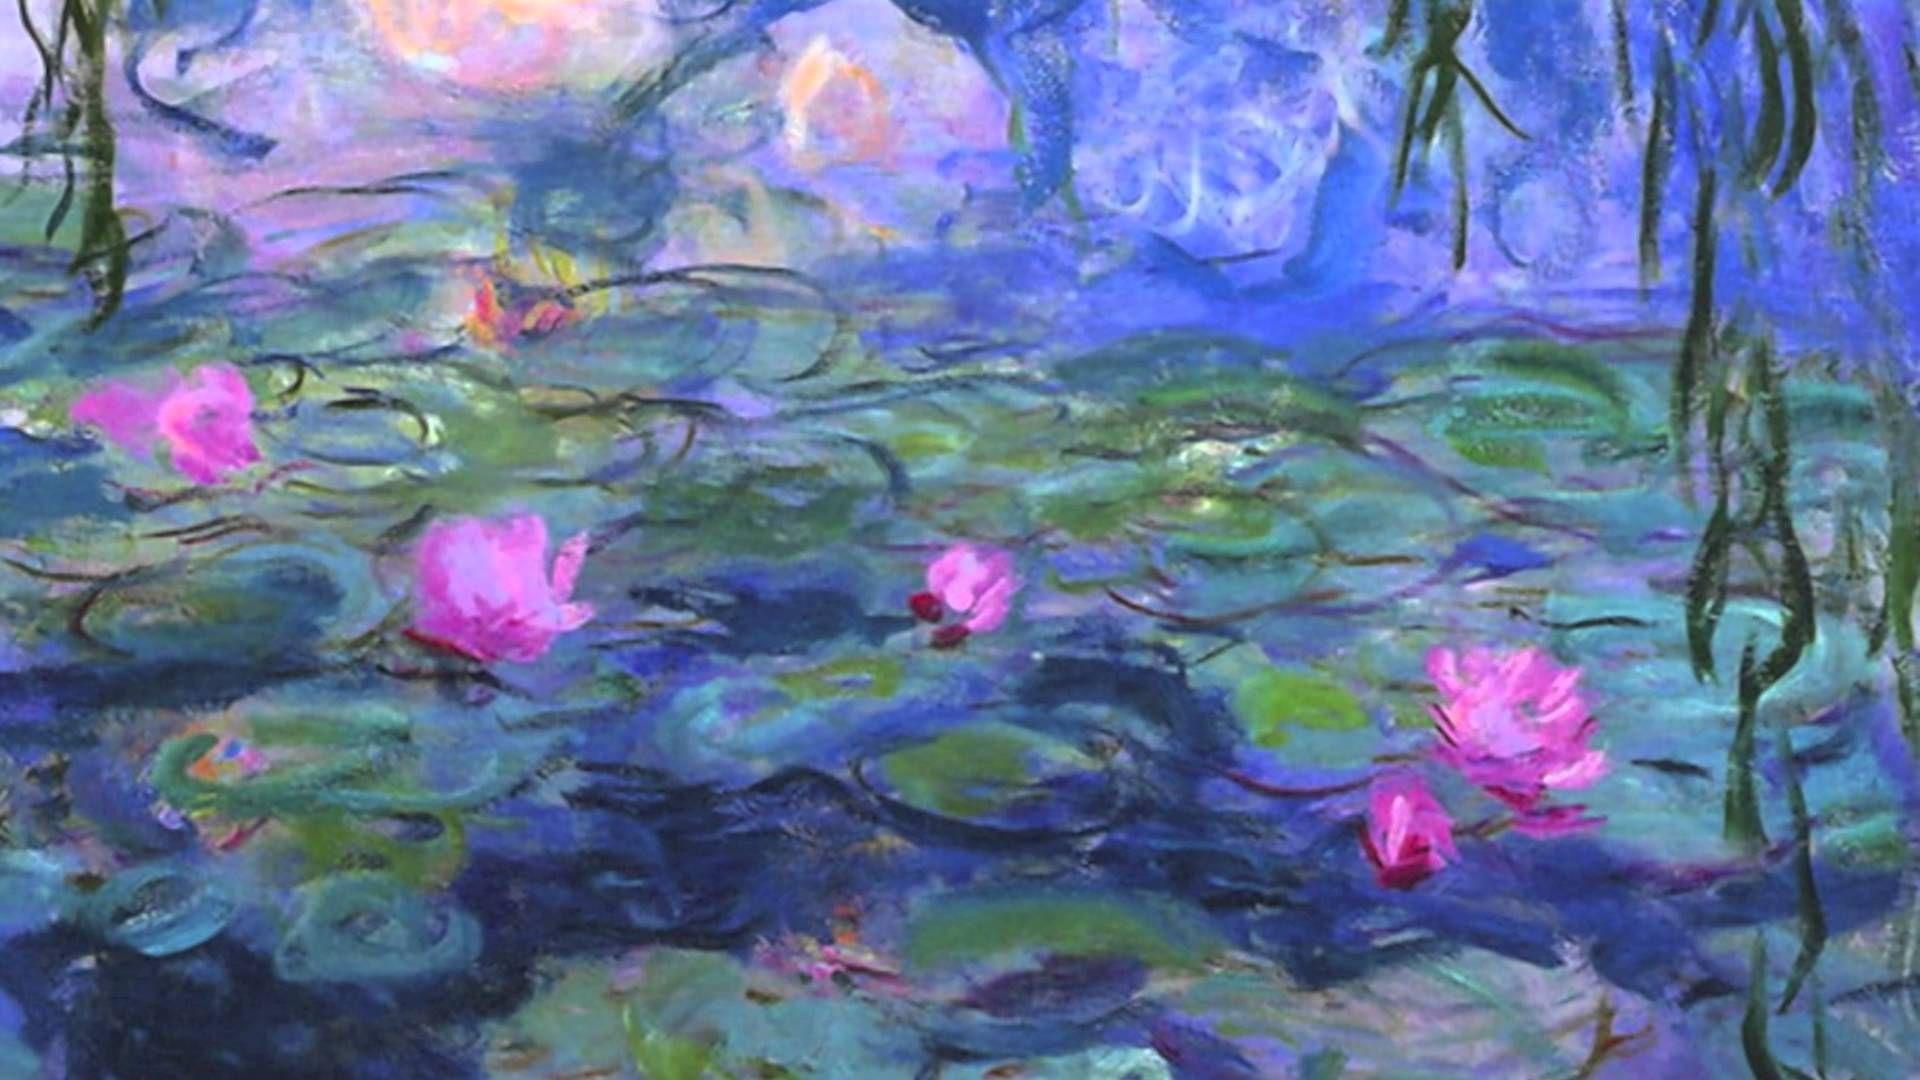 Printable Monet Water Lilies Free Printable Templates